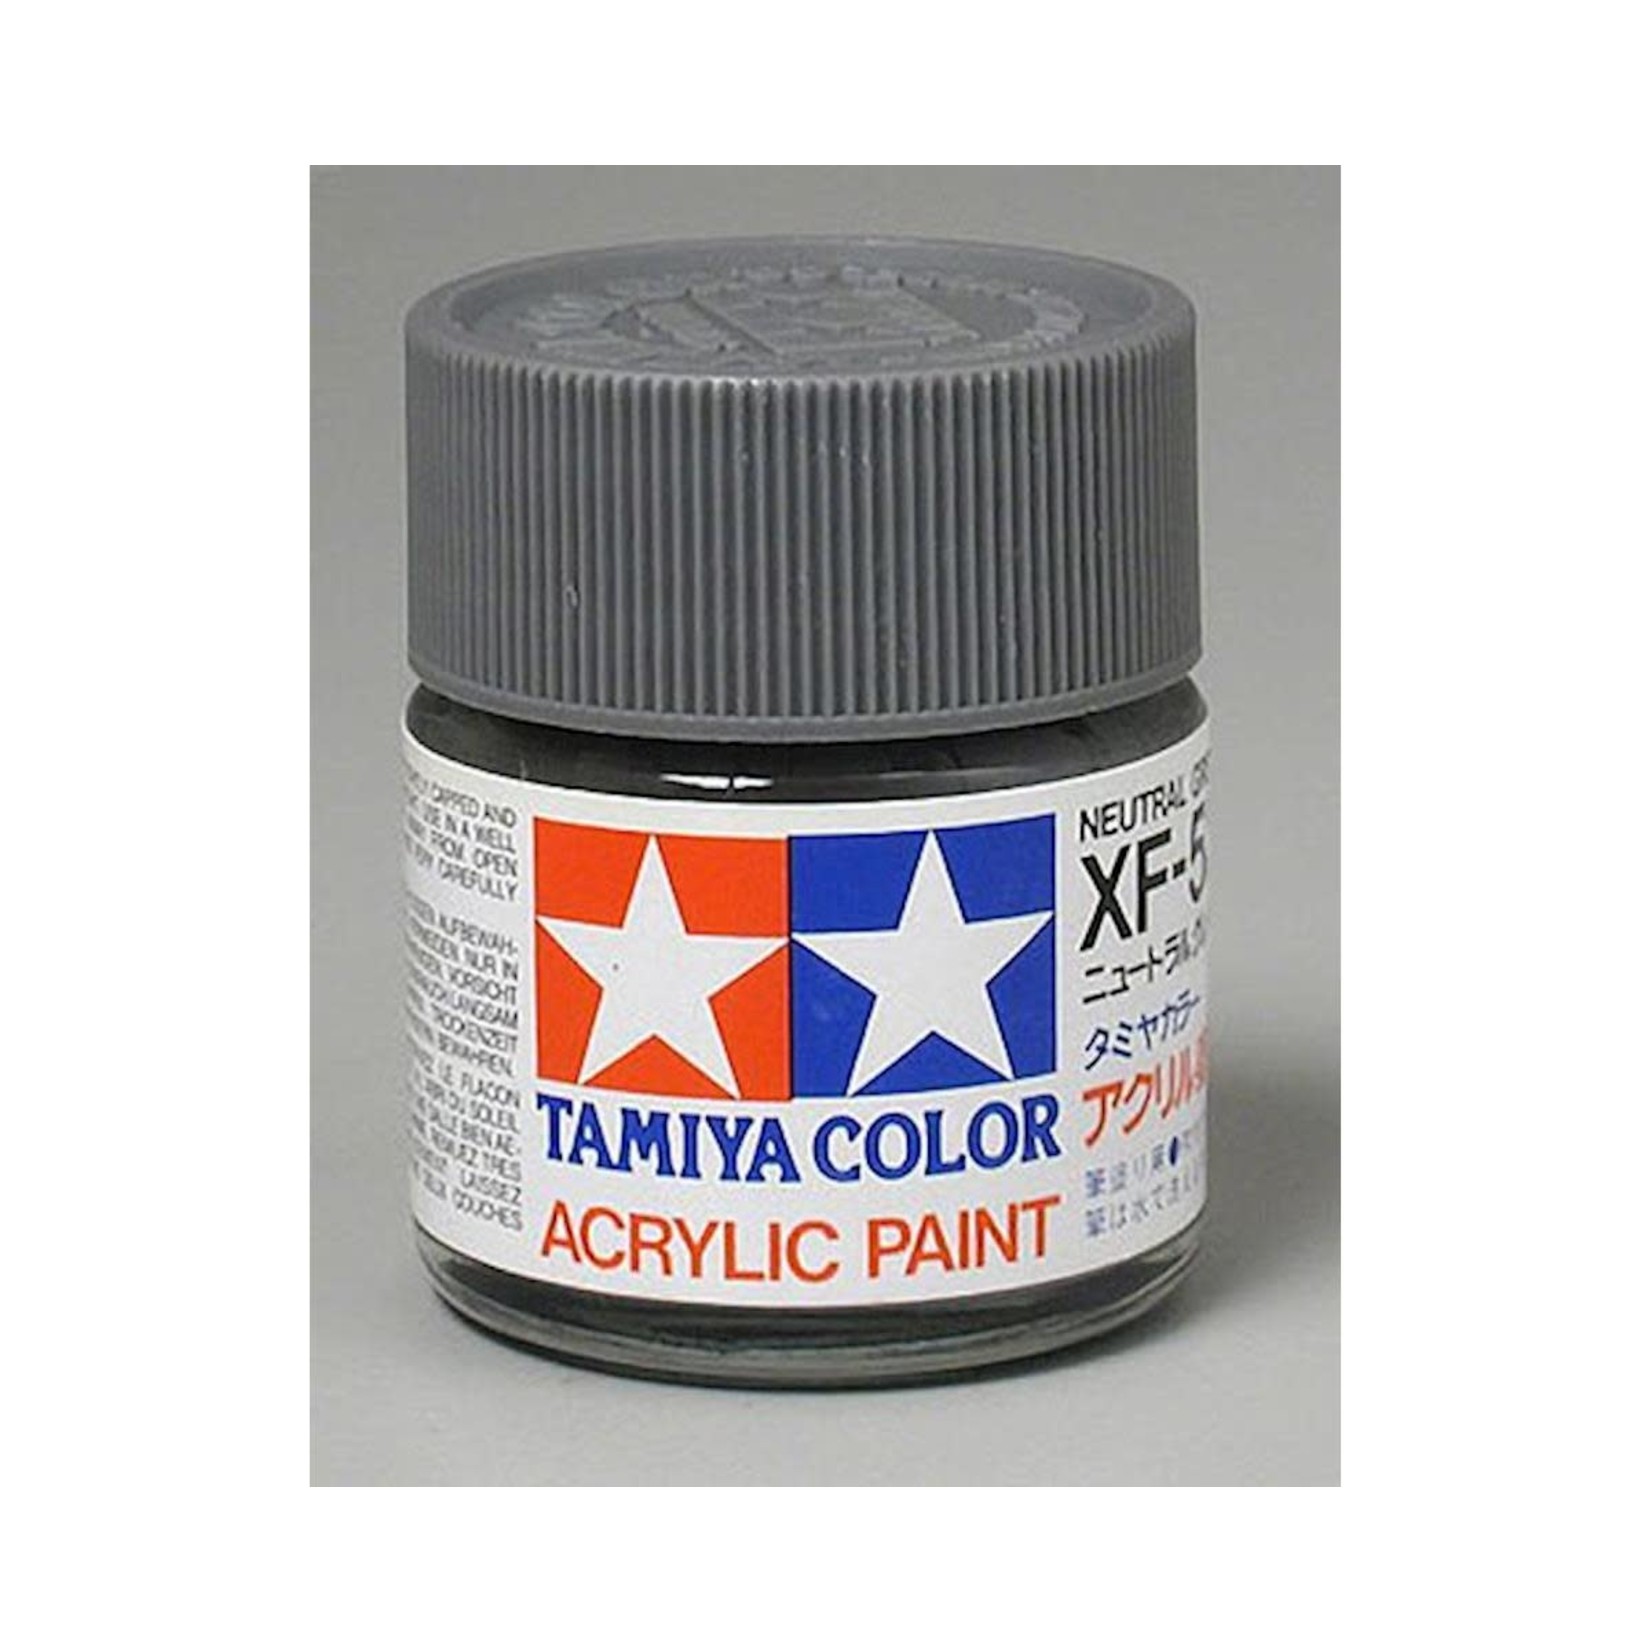 Tamiya Tamiya XF-53 Flat Neutral Grey Acrylic Paint (23ml) #81353